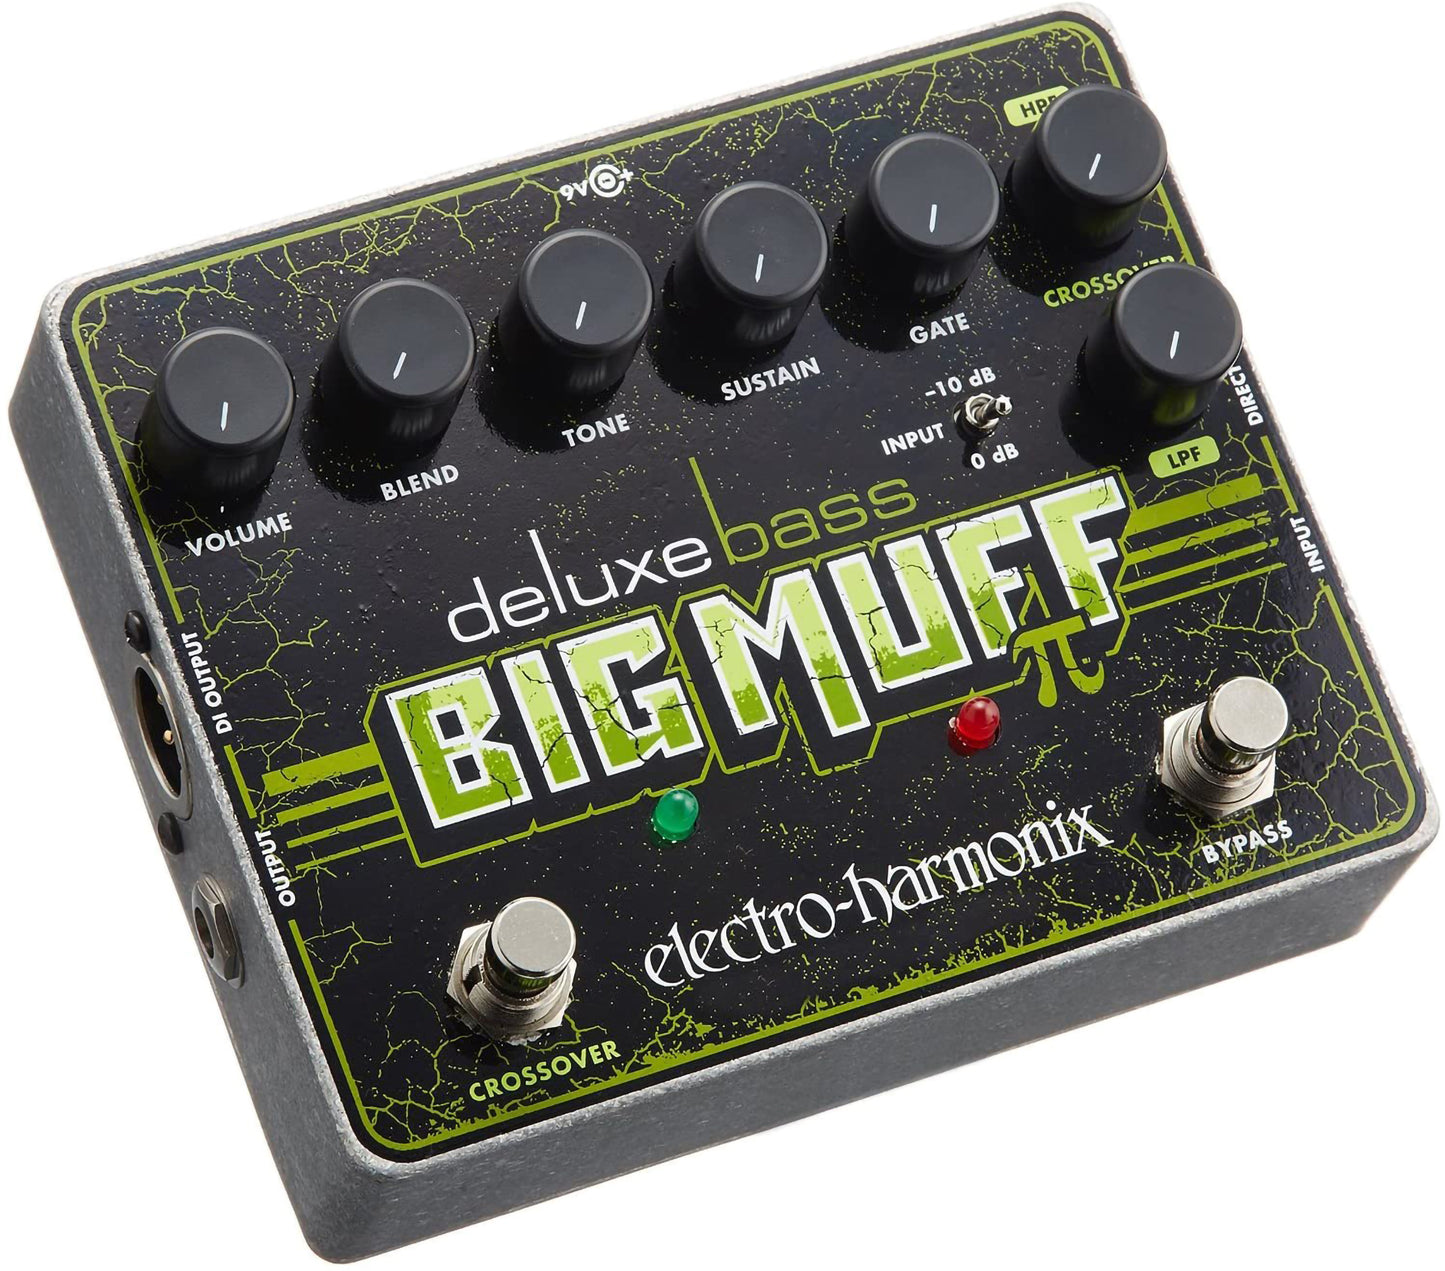 Electro Harmonix Deluxe Bass Big Muff Pi Distortion Pedal